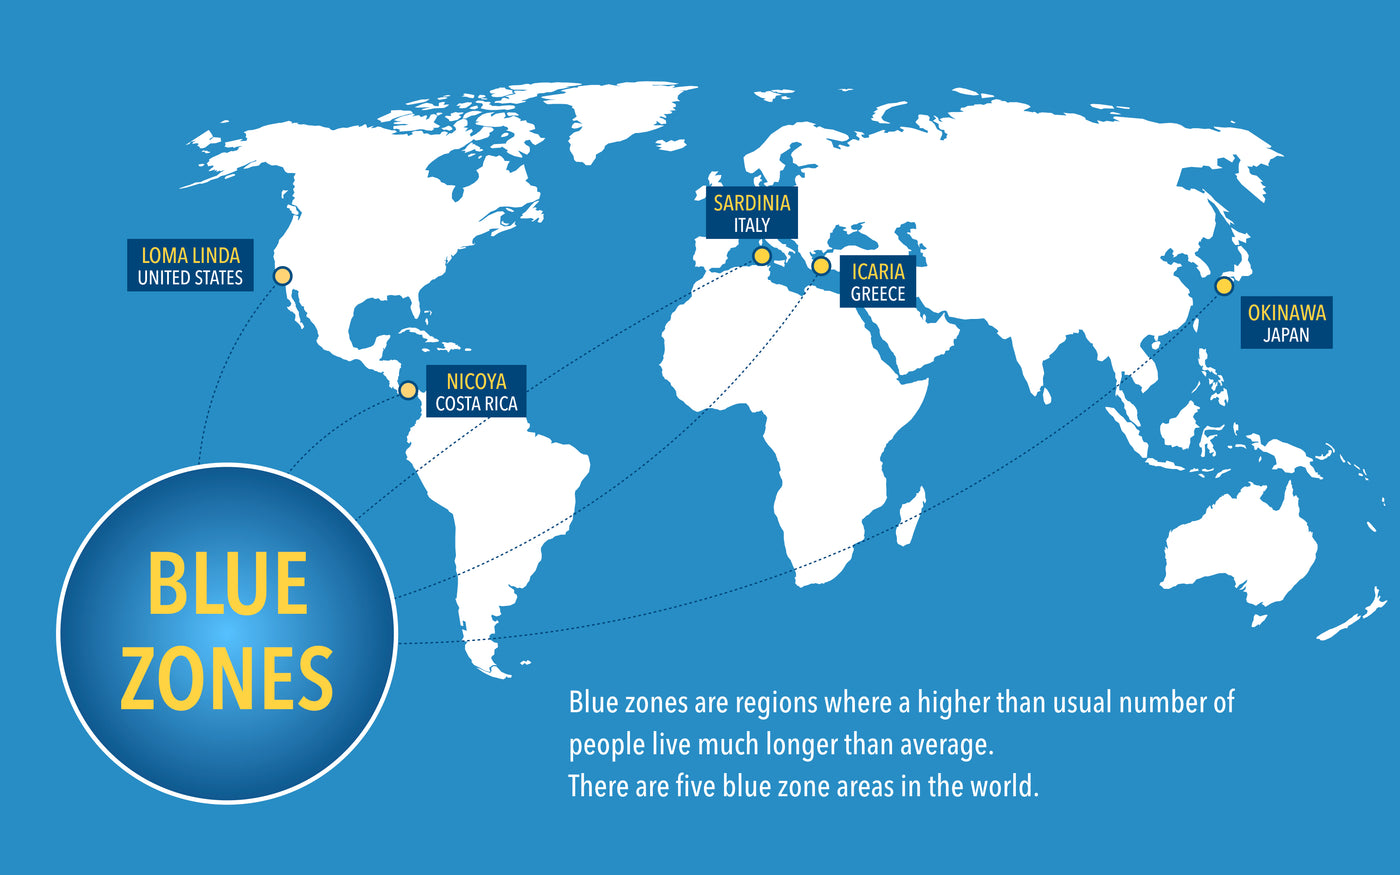 Zone definite ca zone albastre, unde rata de longevitate este mai mare ca oriunde în lume.